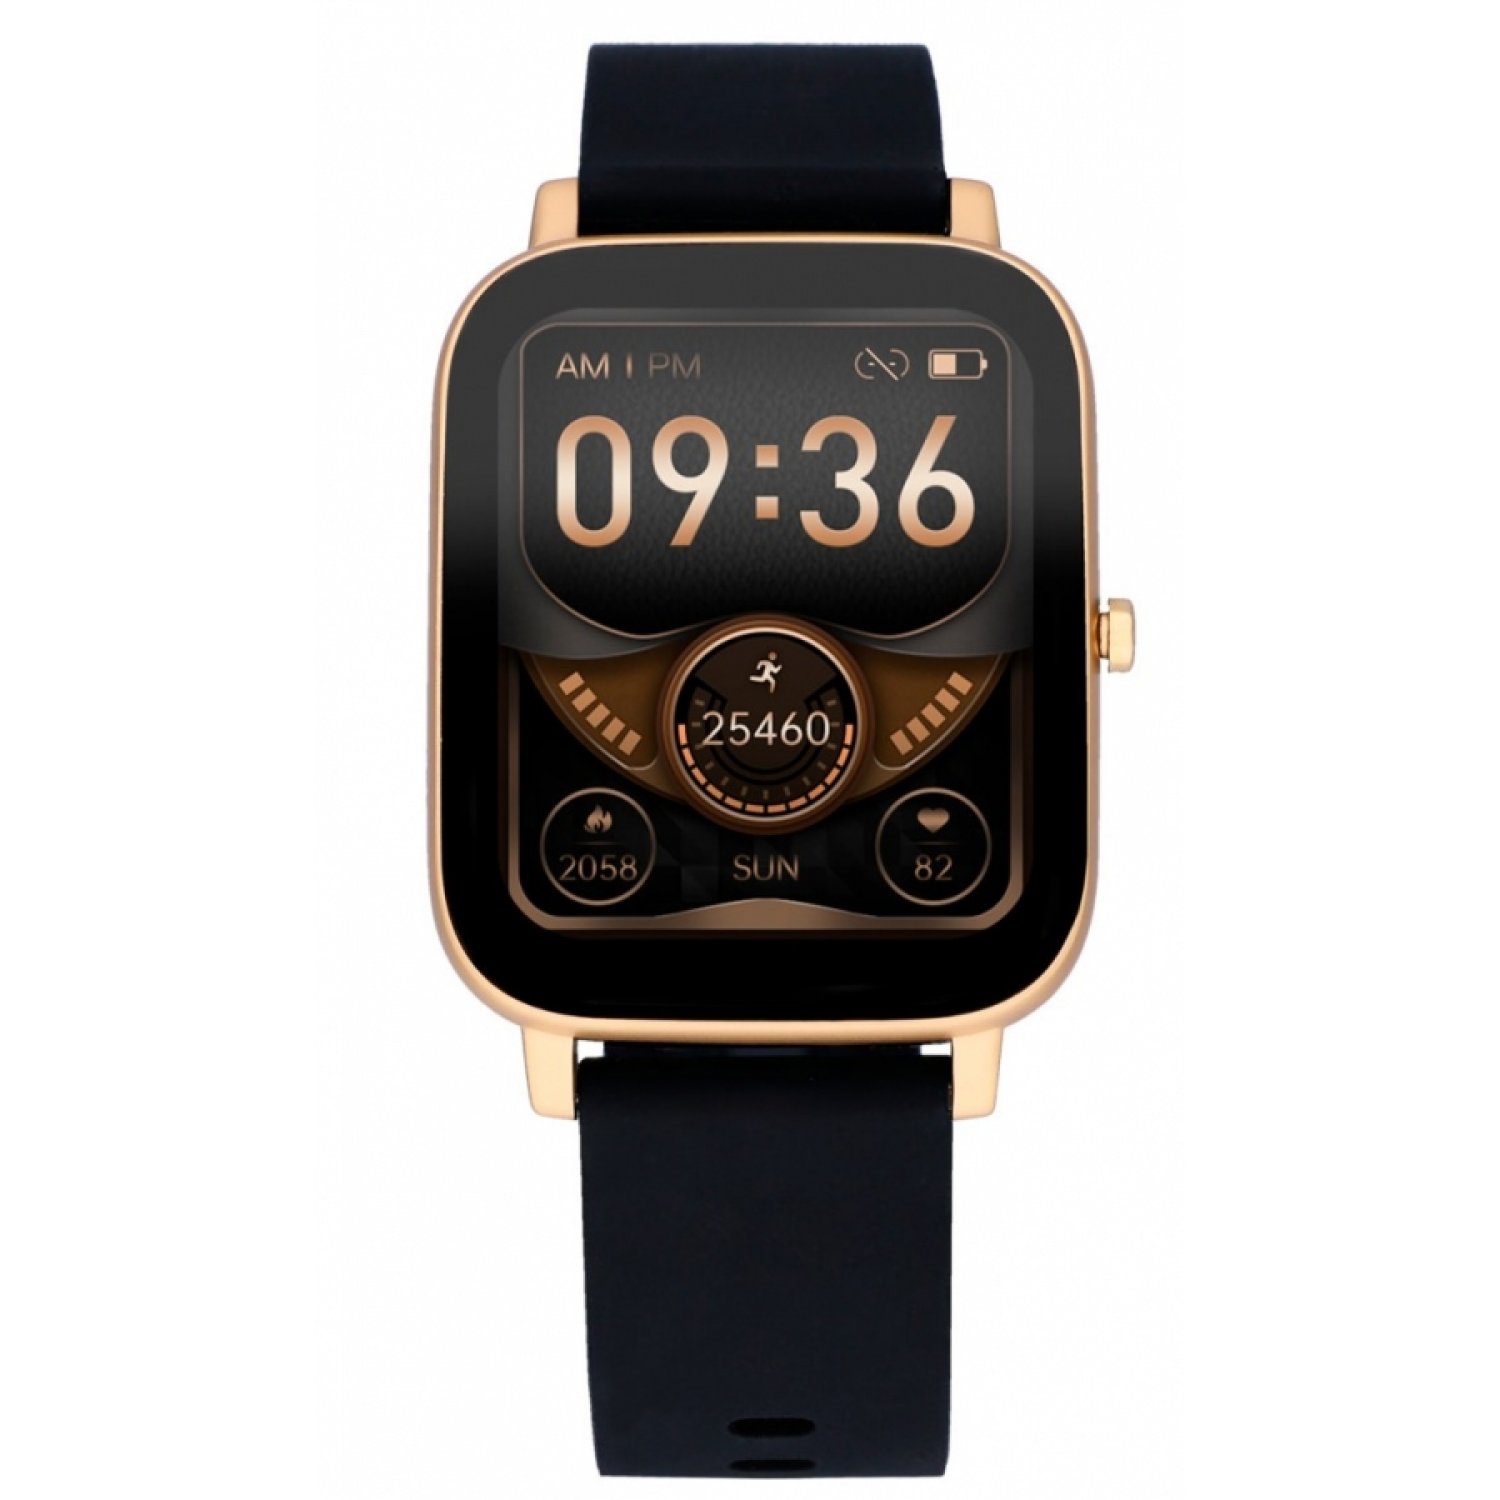 Reloj Lotus Smartwatch 50002/A Smartime mujer - Francisco Ortuño